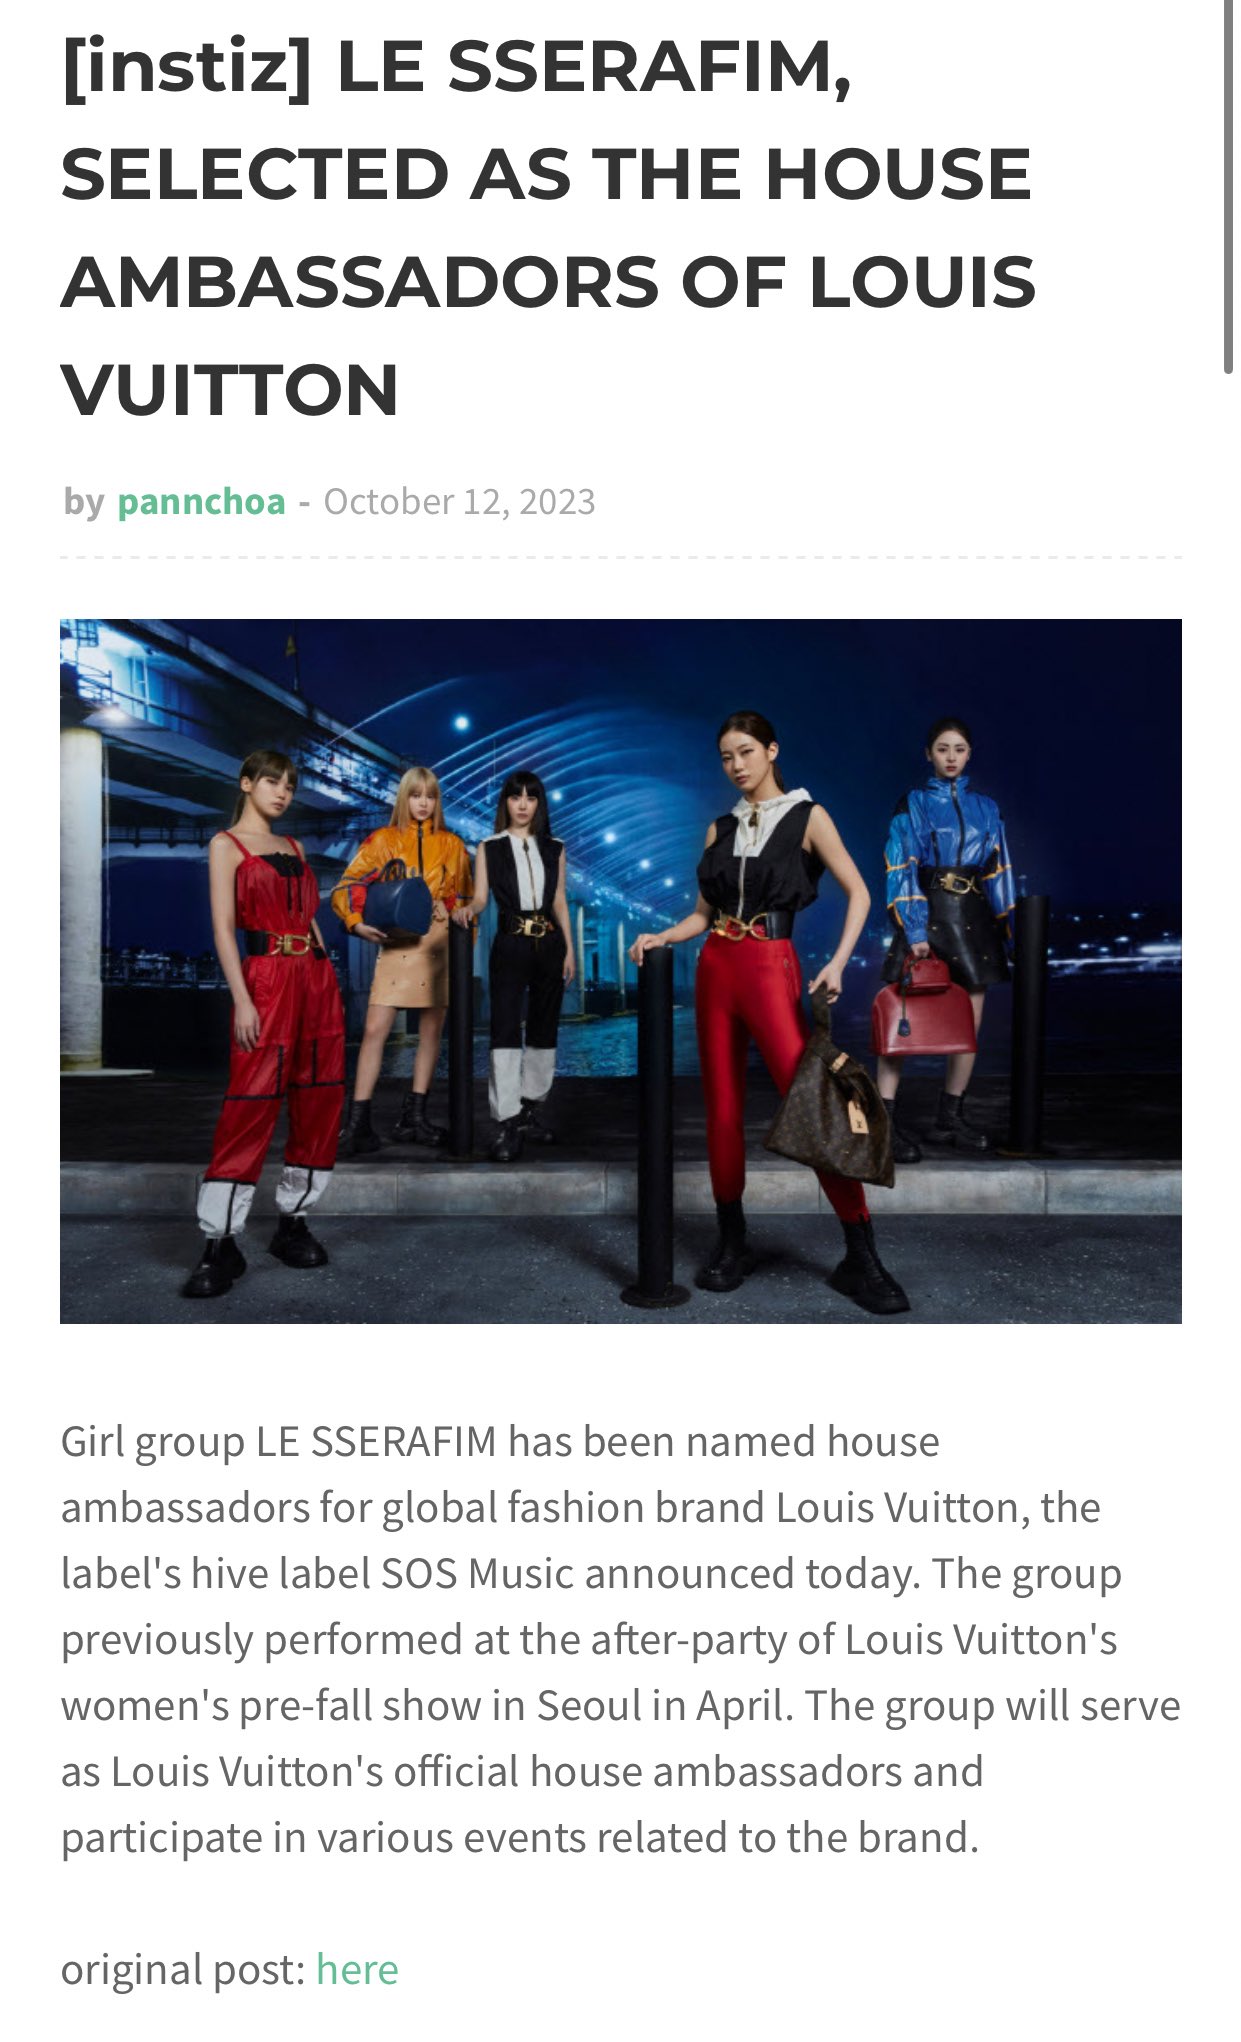 LE SSERAFIM New Louis Vuitton House Ambassadors